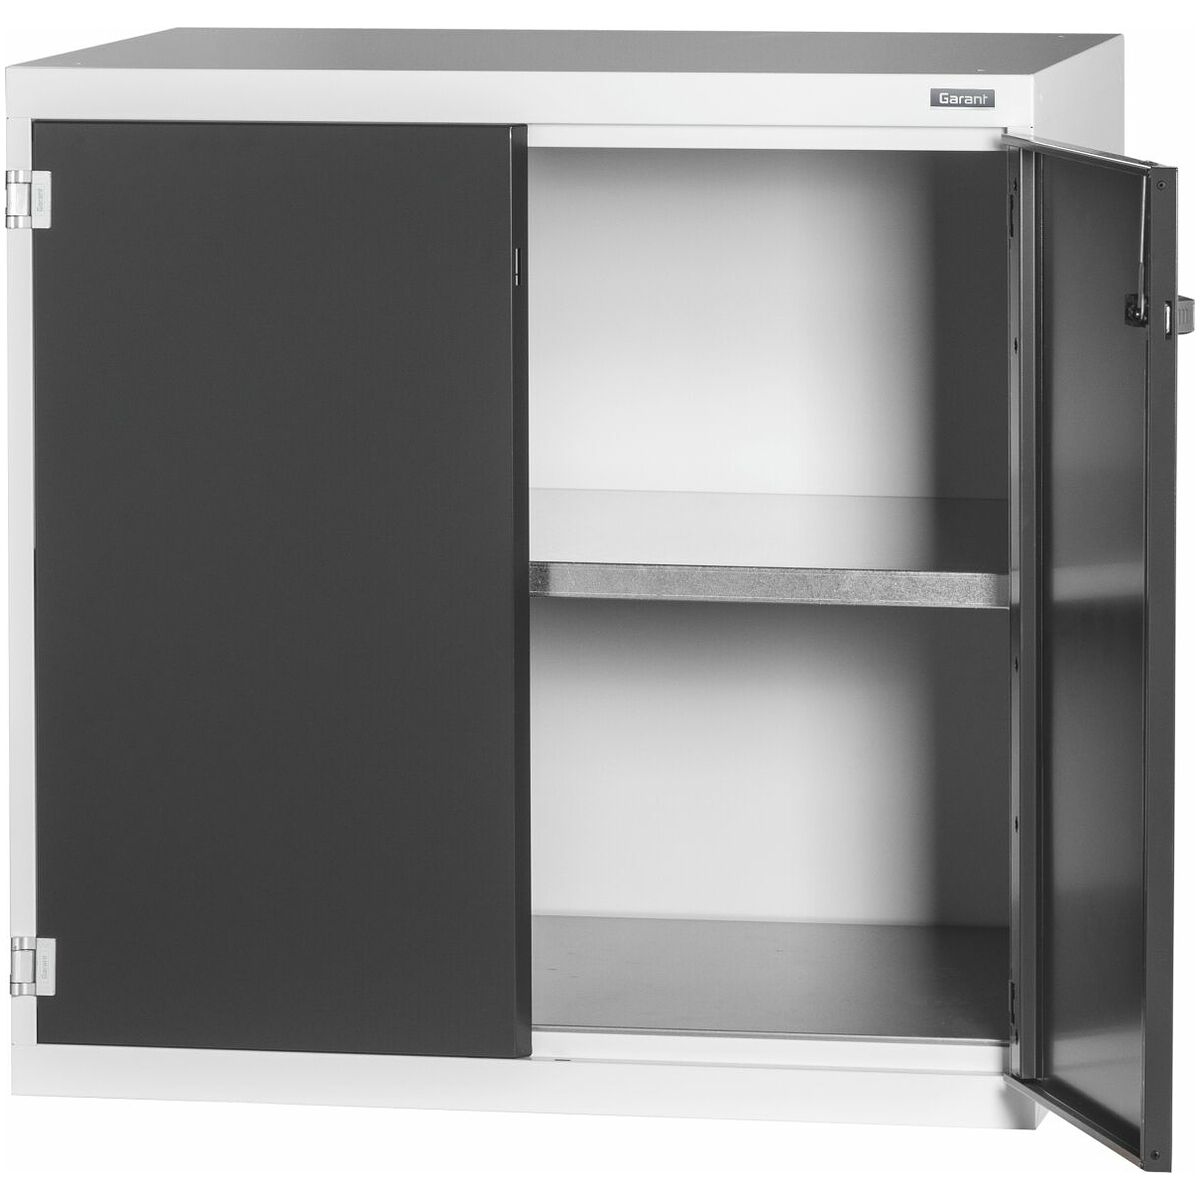 Large-capacity base cabinet with plain sheet metal swing doors